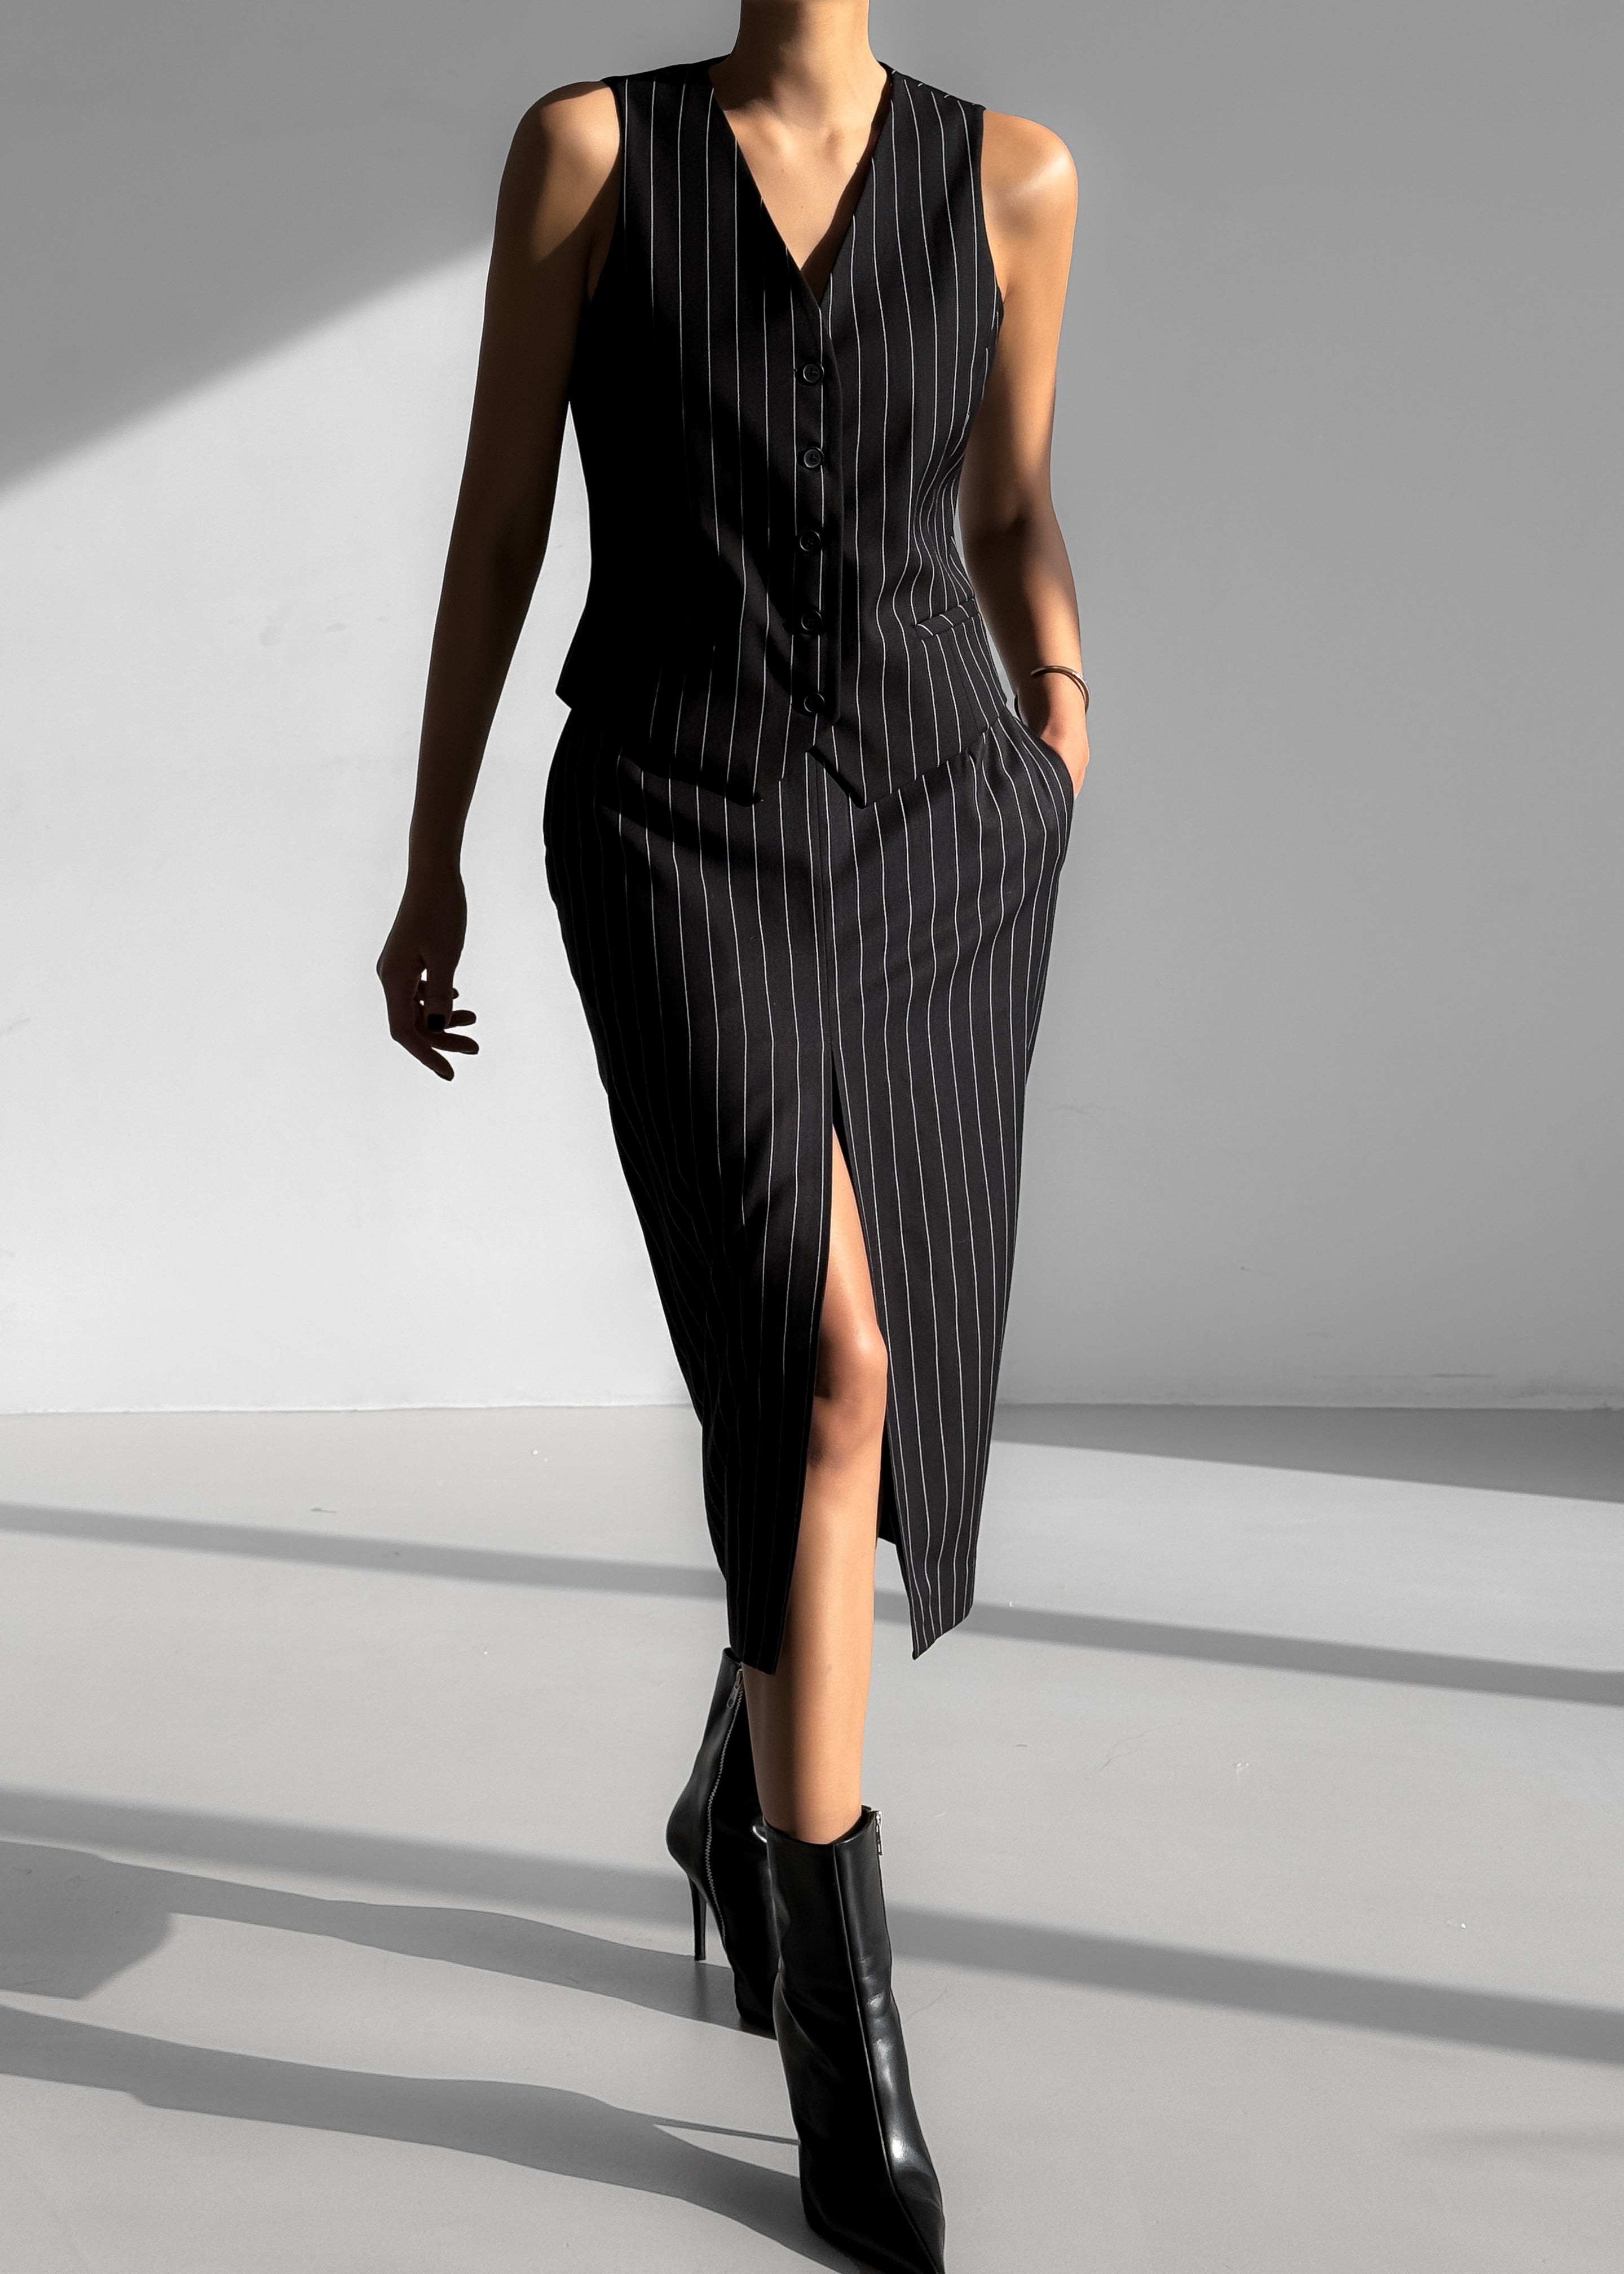 Holland Midi Slit Skirt - Black/White Pinstripe - 1